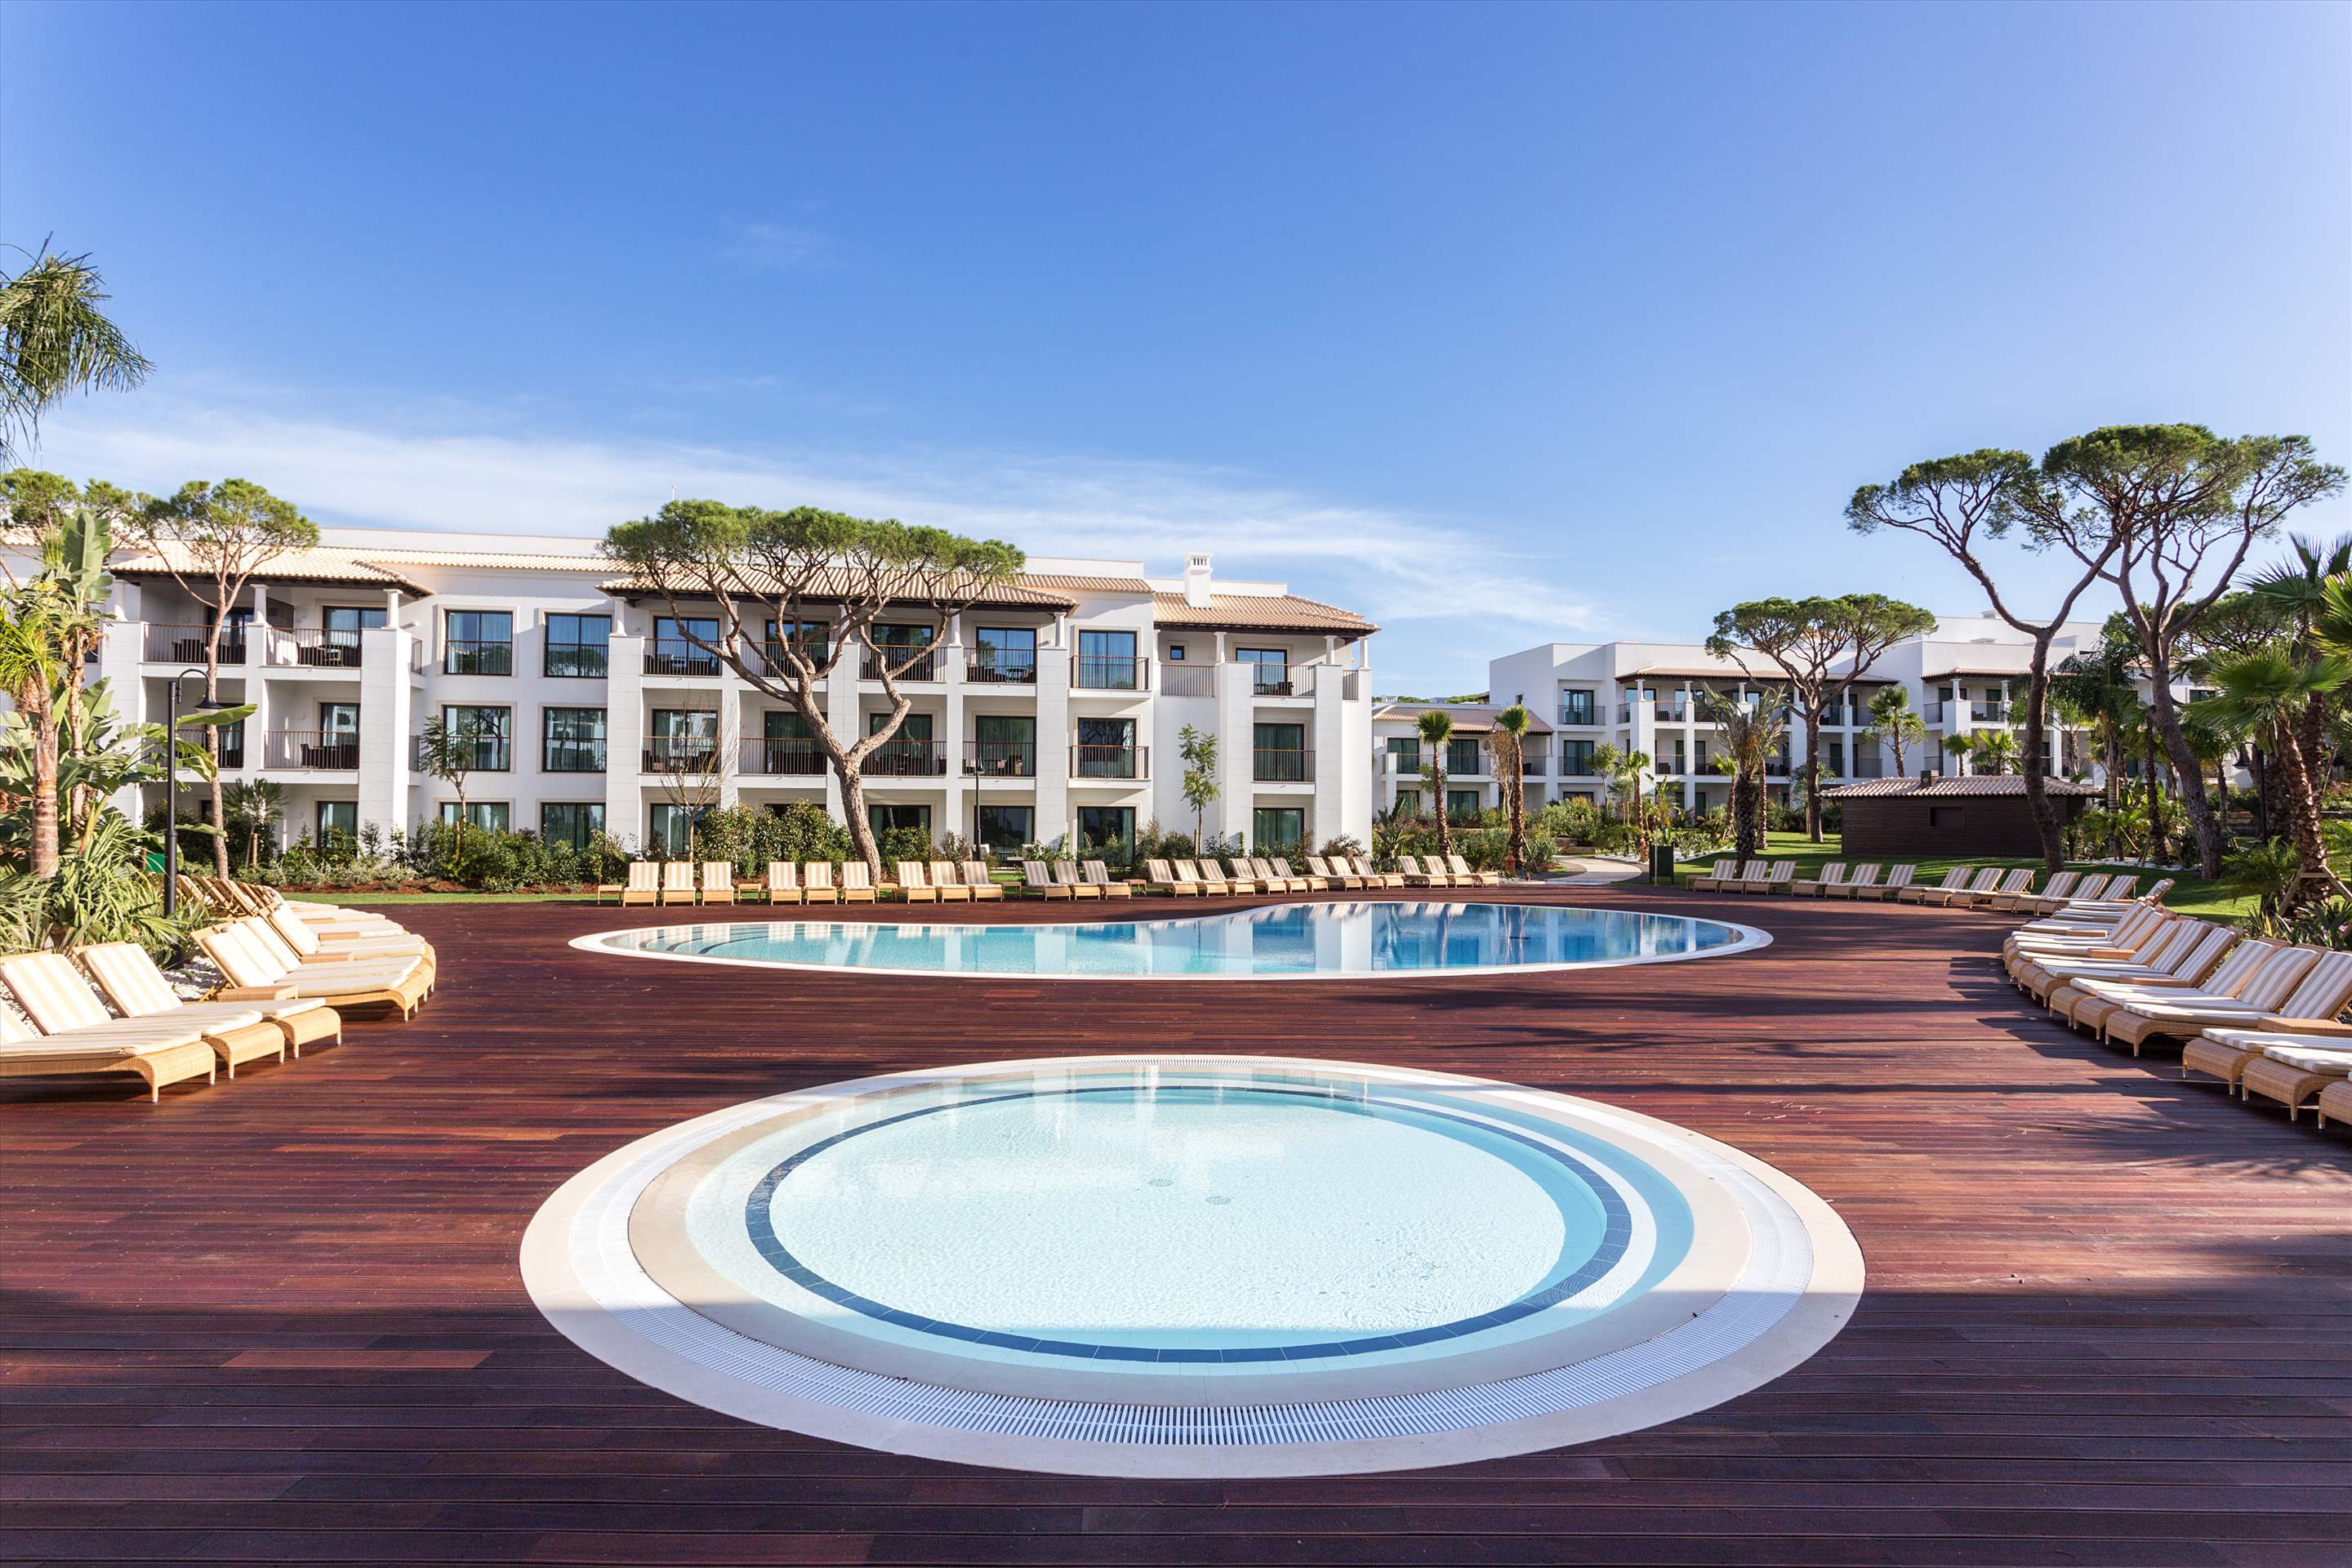 Pine Cliffs Gardens, Three Bedroom Suite, S/C Basis, 3 bedroom apartment in Pine Cliffs Resort, Algarve Photo #7